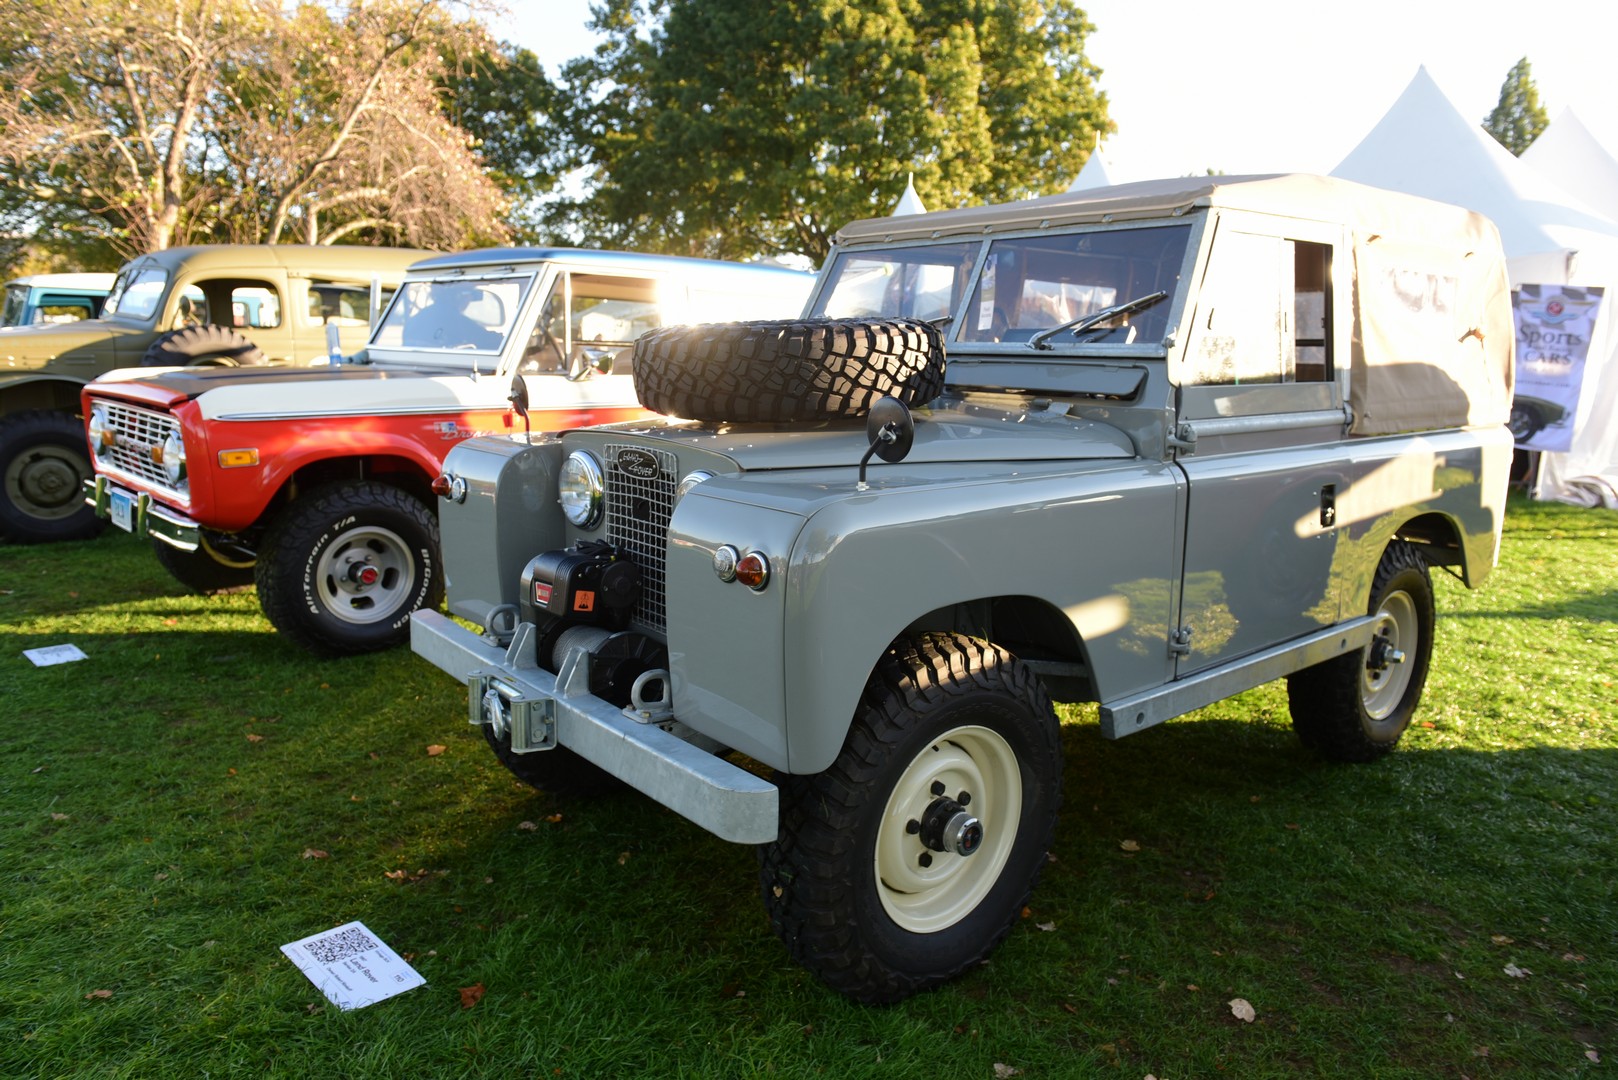 1967 Land Rover Series 2A. Owner: Robert Minkoff.